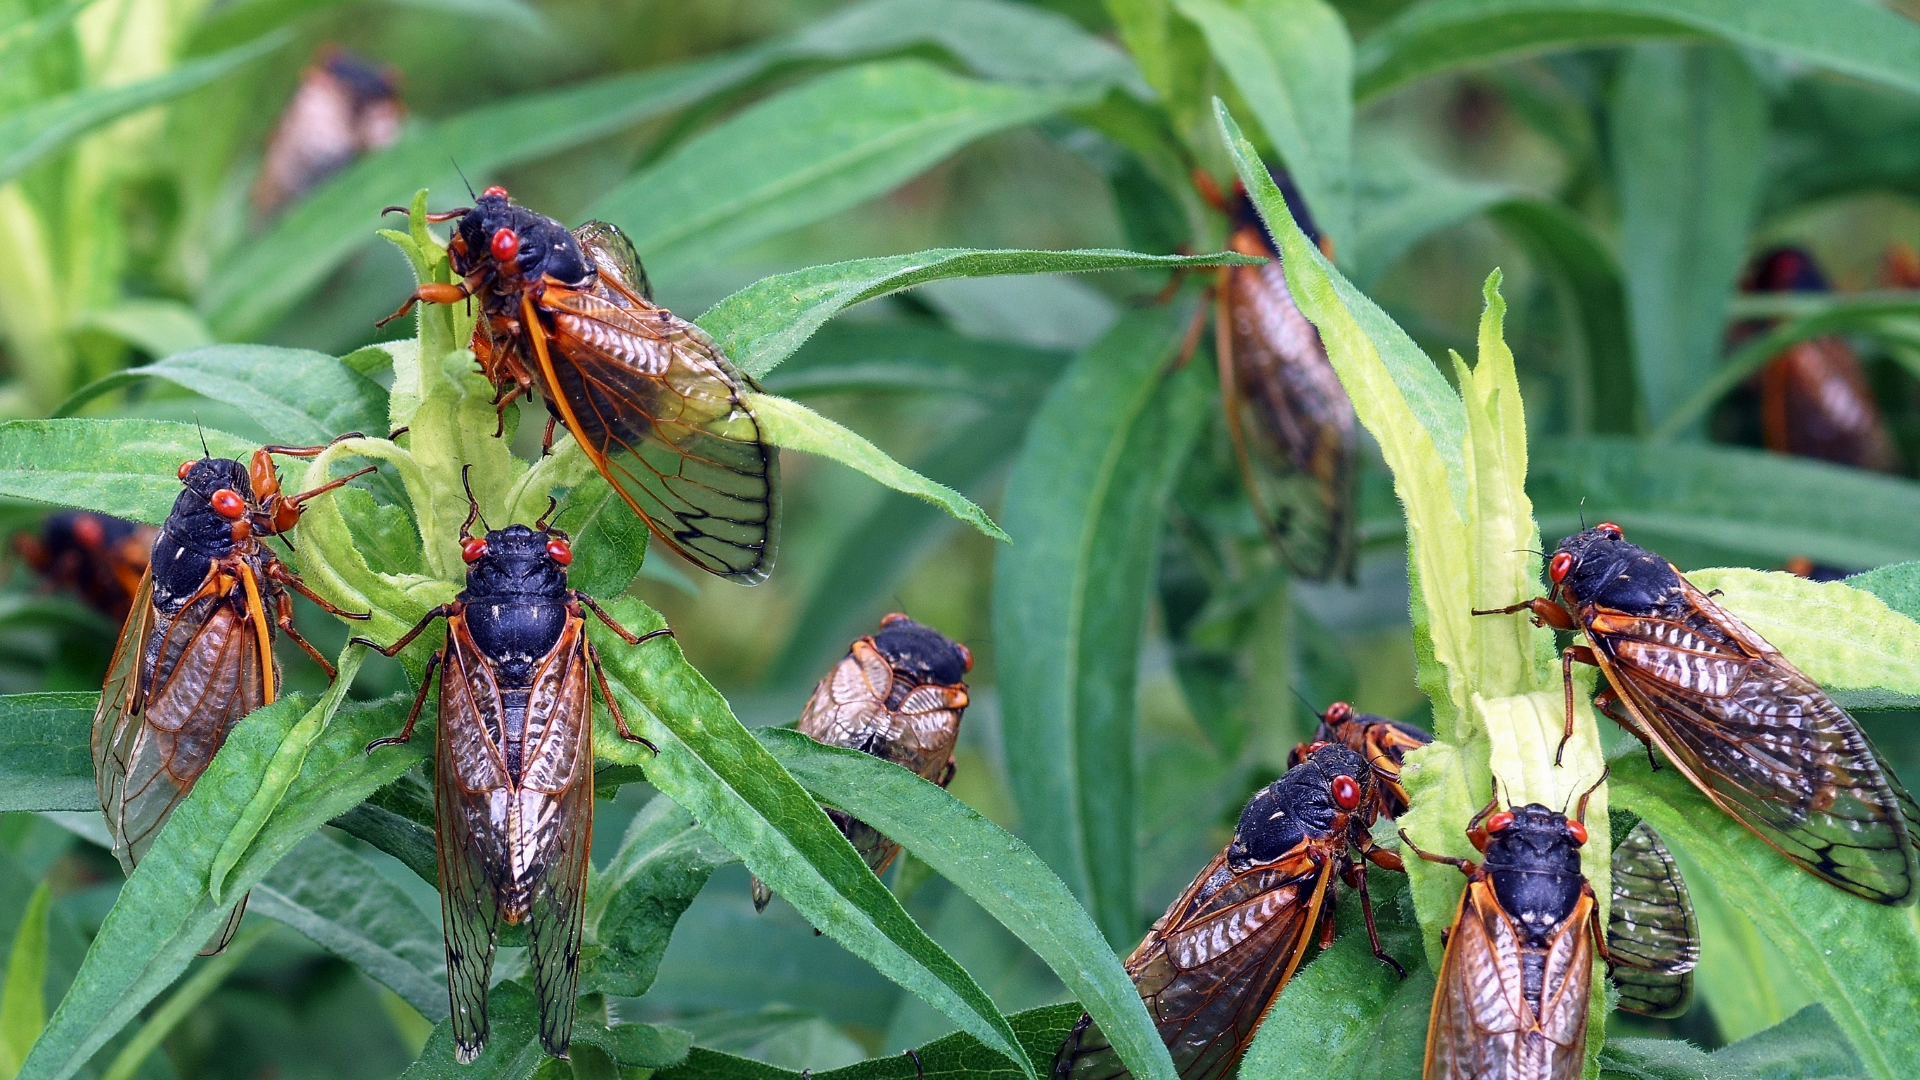 A bunch of cicadas clinging to vegetation.